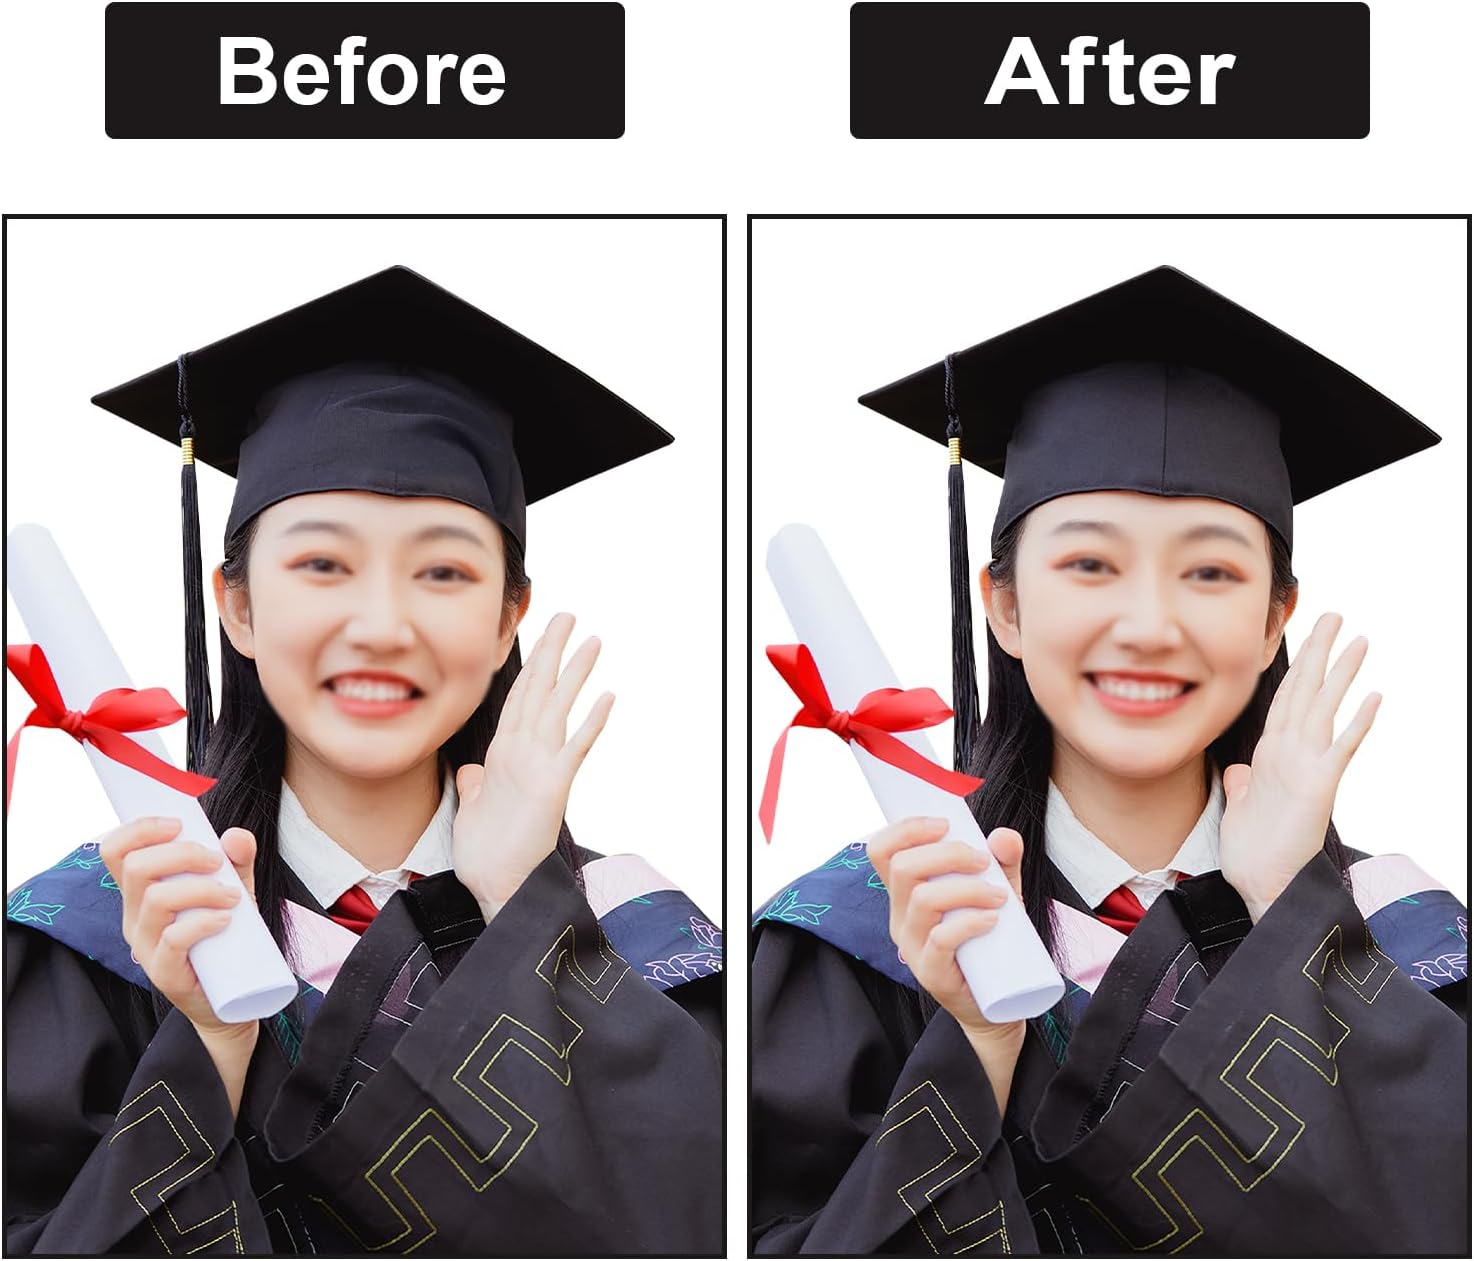 Adjustable Secures Headband Insert,Upgrade Inside Graduation Cap Don't Change Hair,Secure Hairstyle Unisex